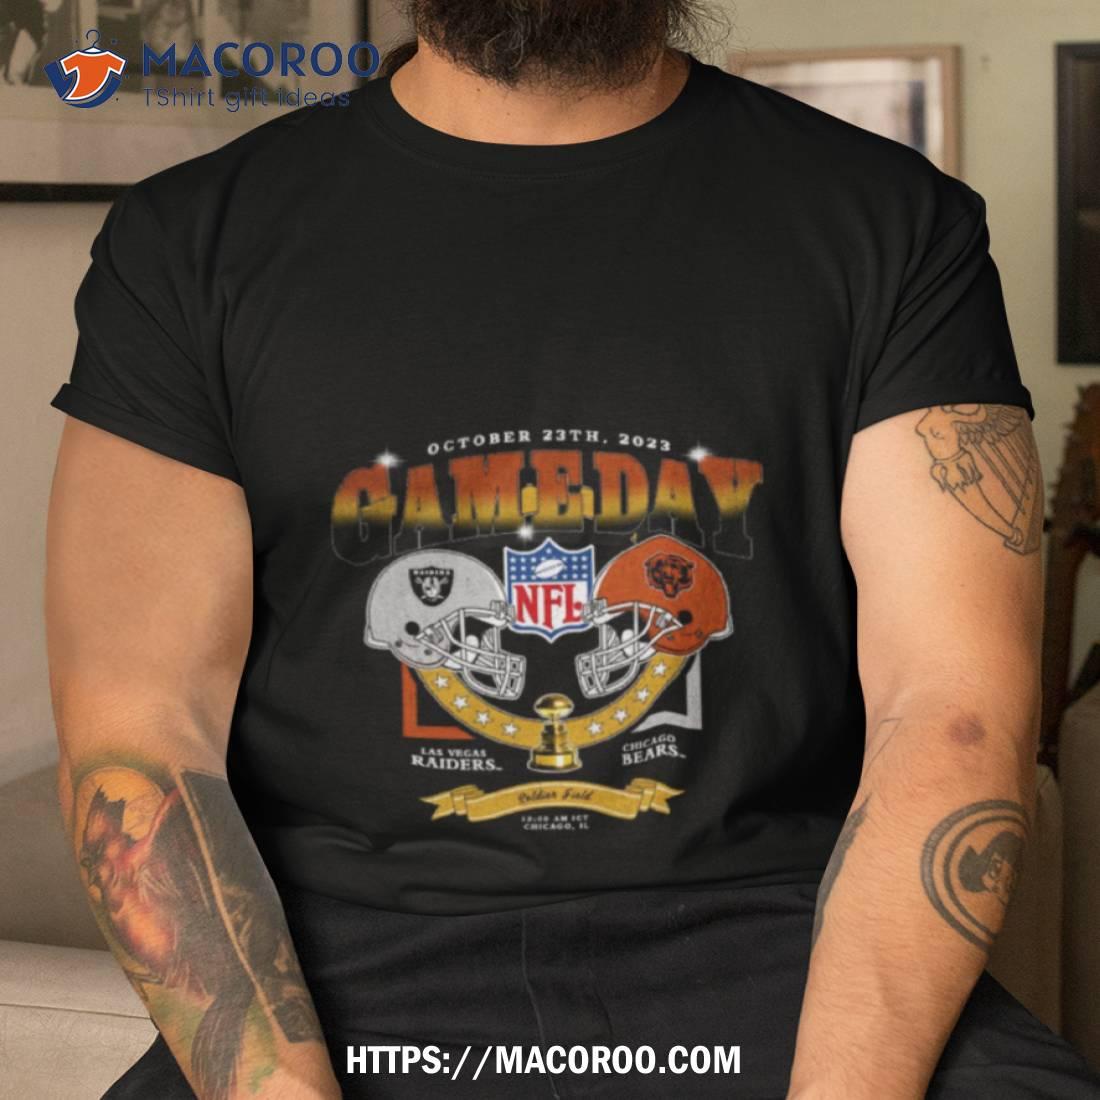 15% OFF Iron Maiden Las Vegas Raiders T shirt For Men – 4 Fan Shop